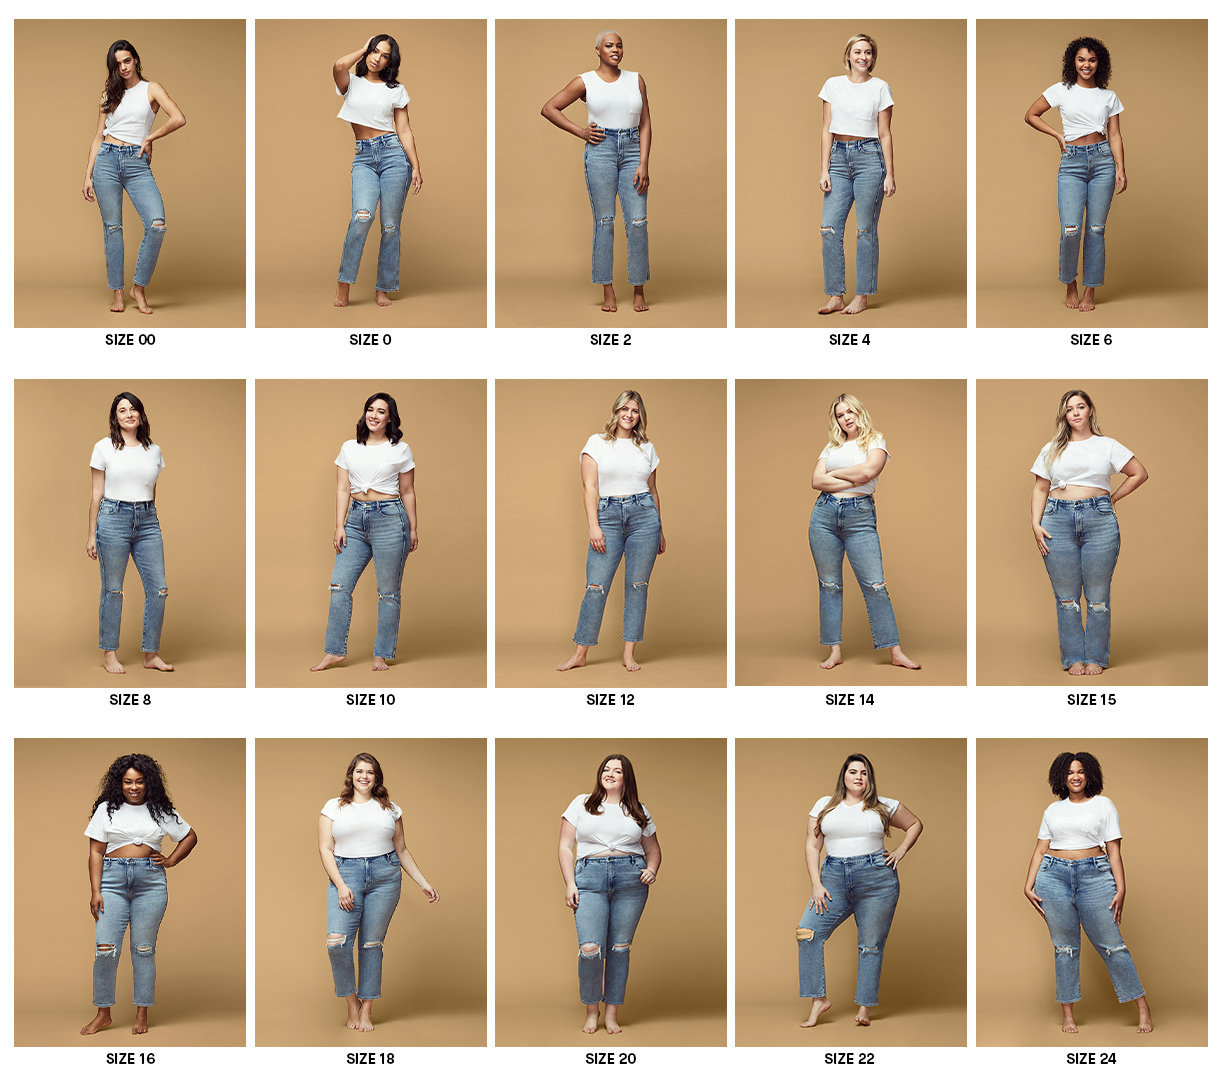 16 size jeans